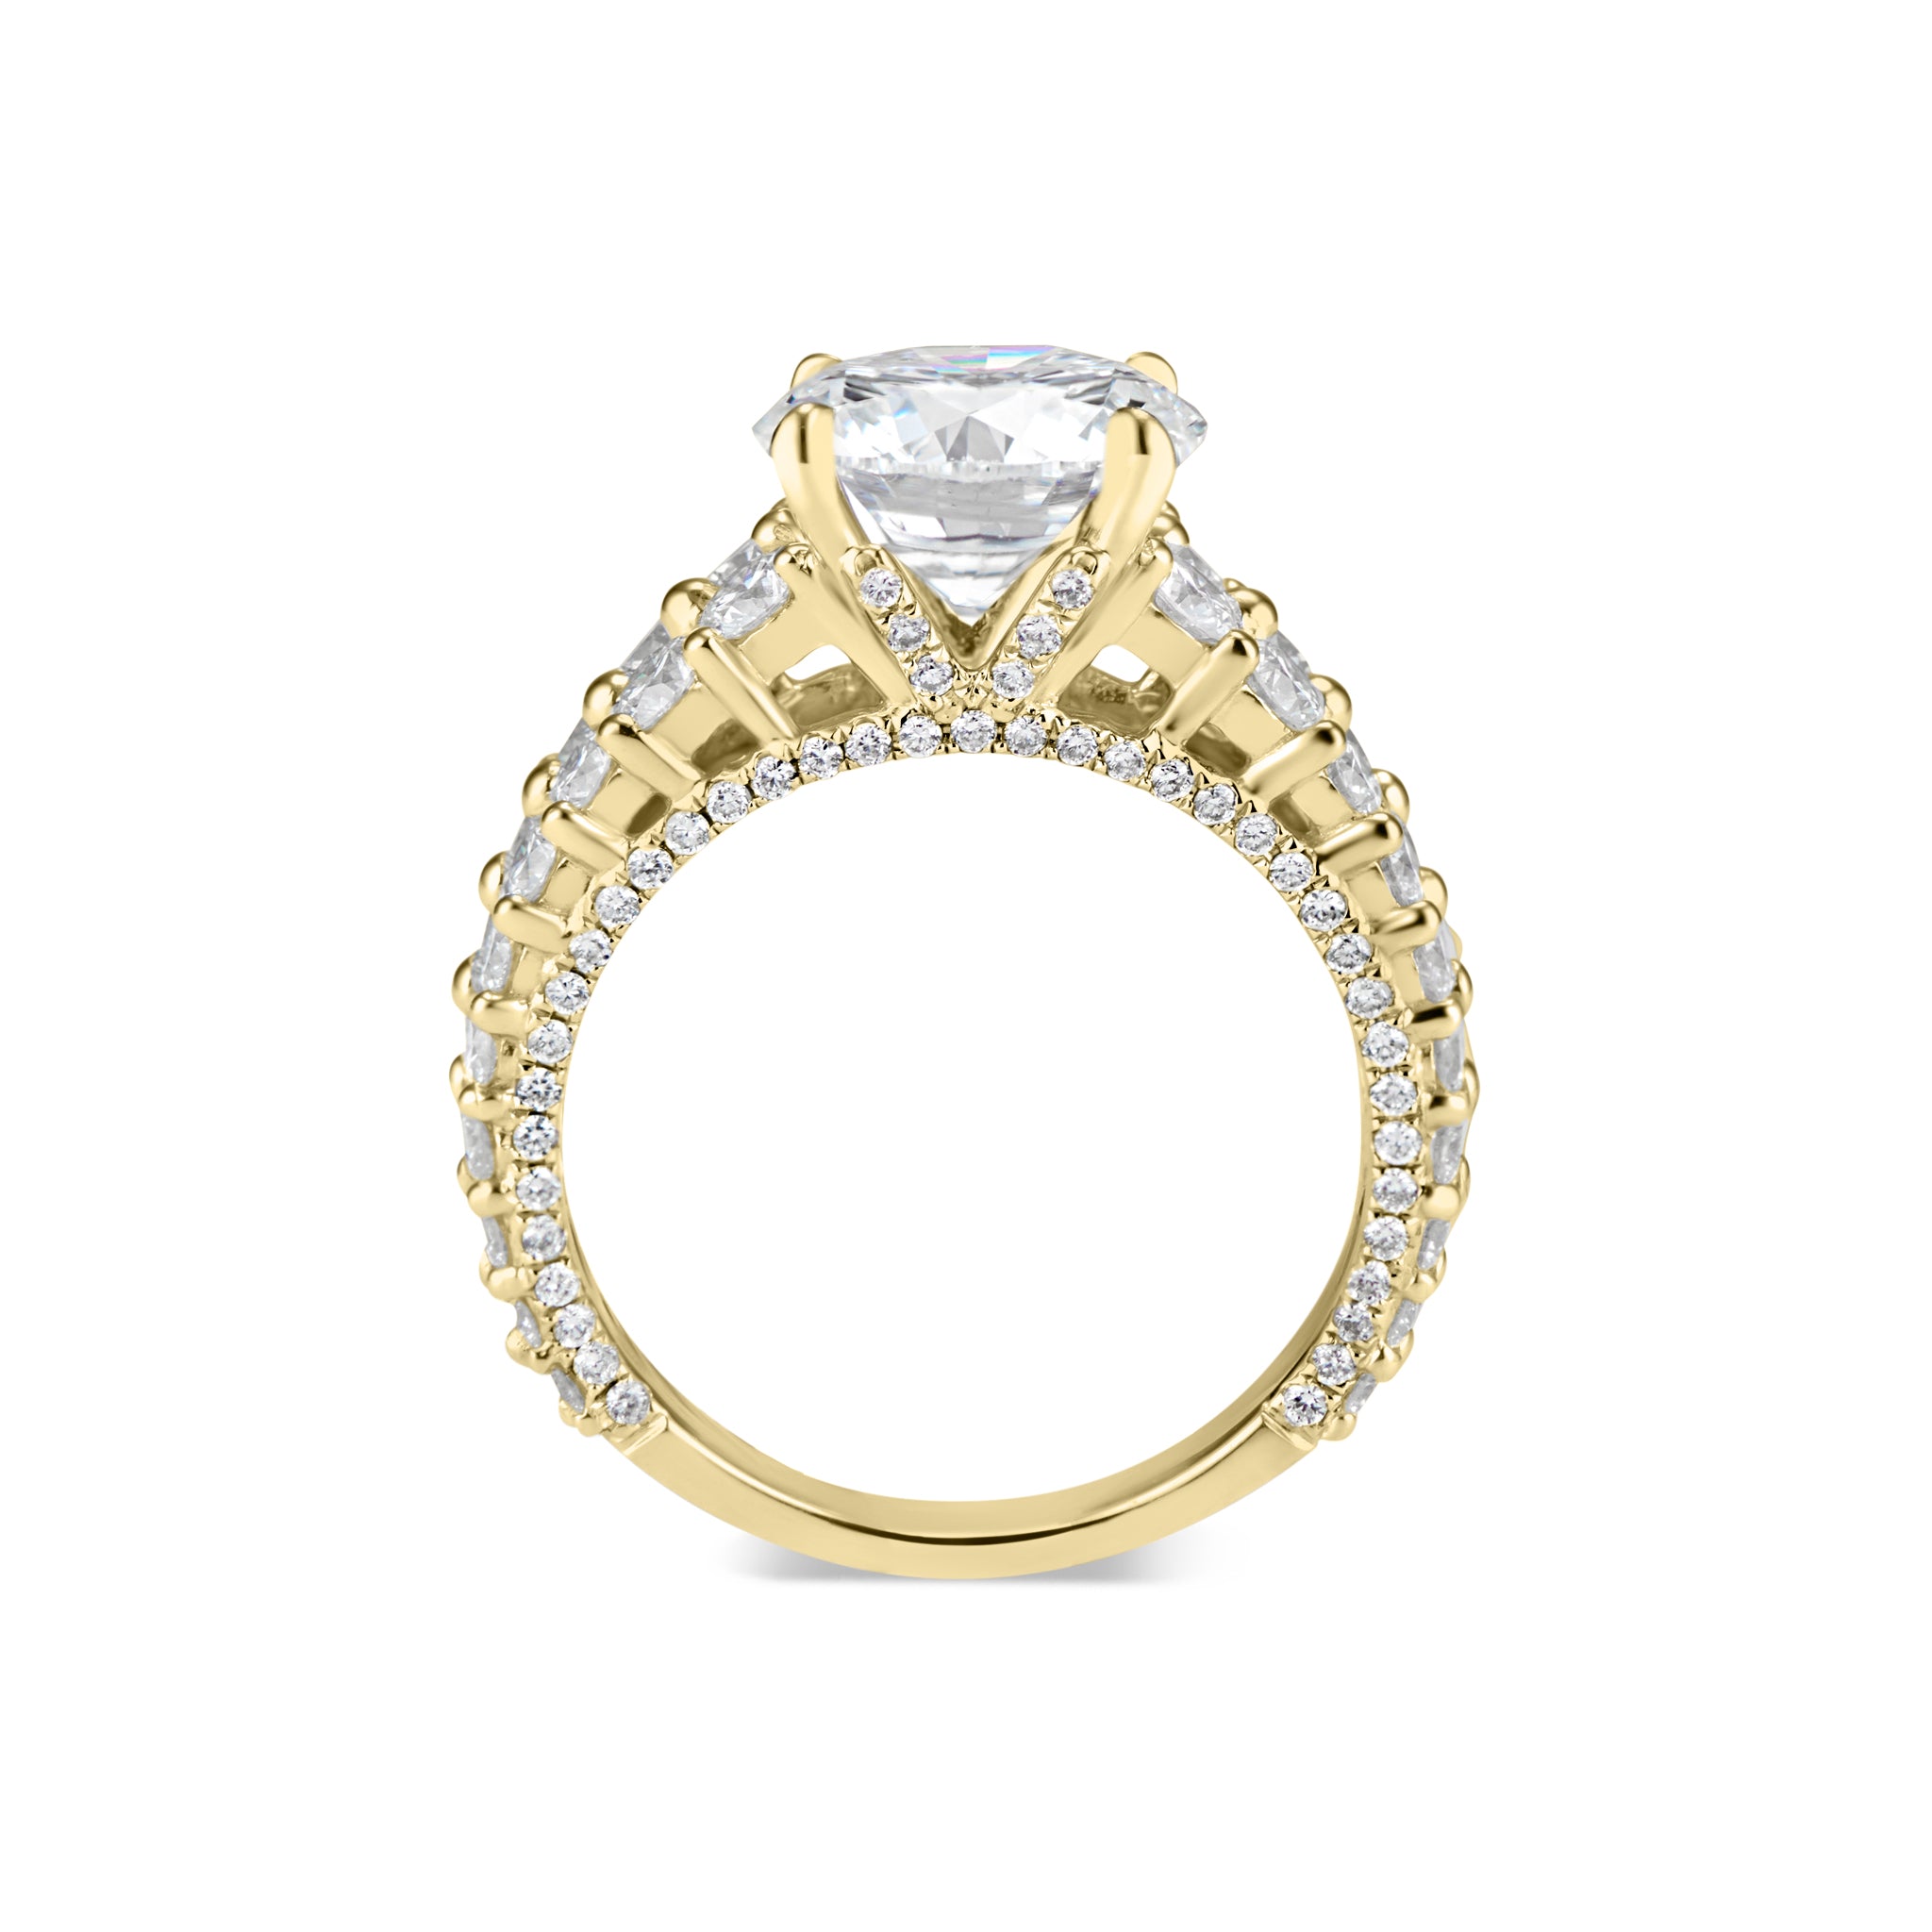 Amala - 14k White Gold 2 Carat Round Wide Band Natural Diamond Engagement  Ring @ $7300